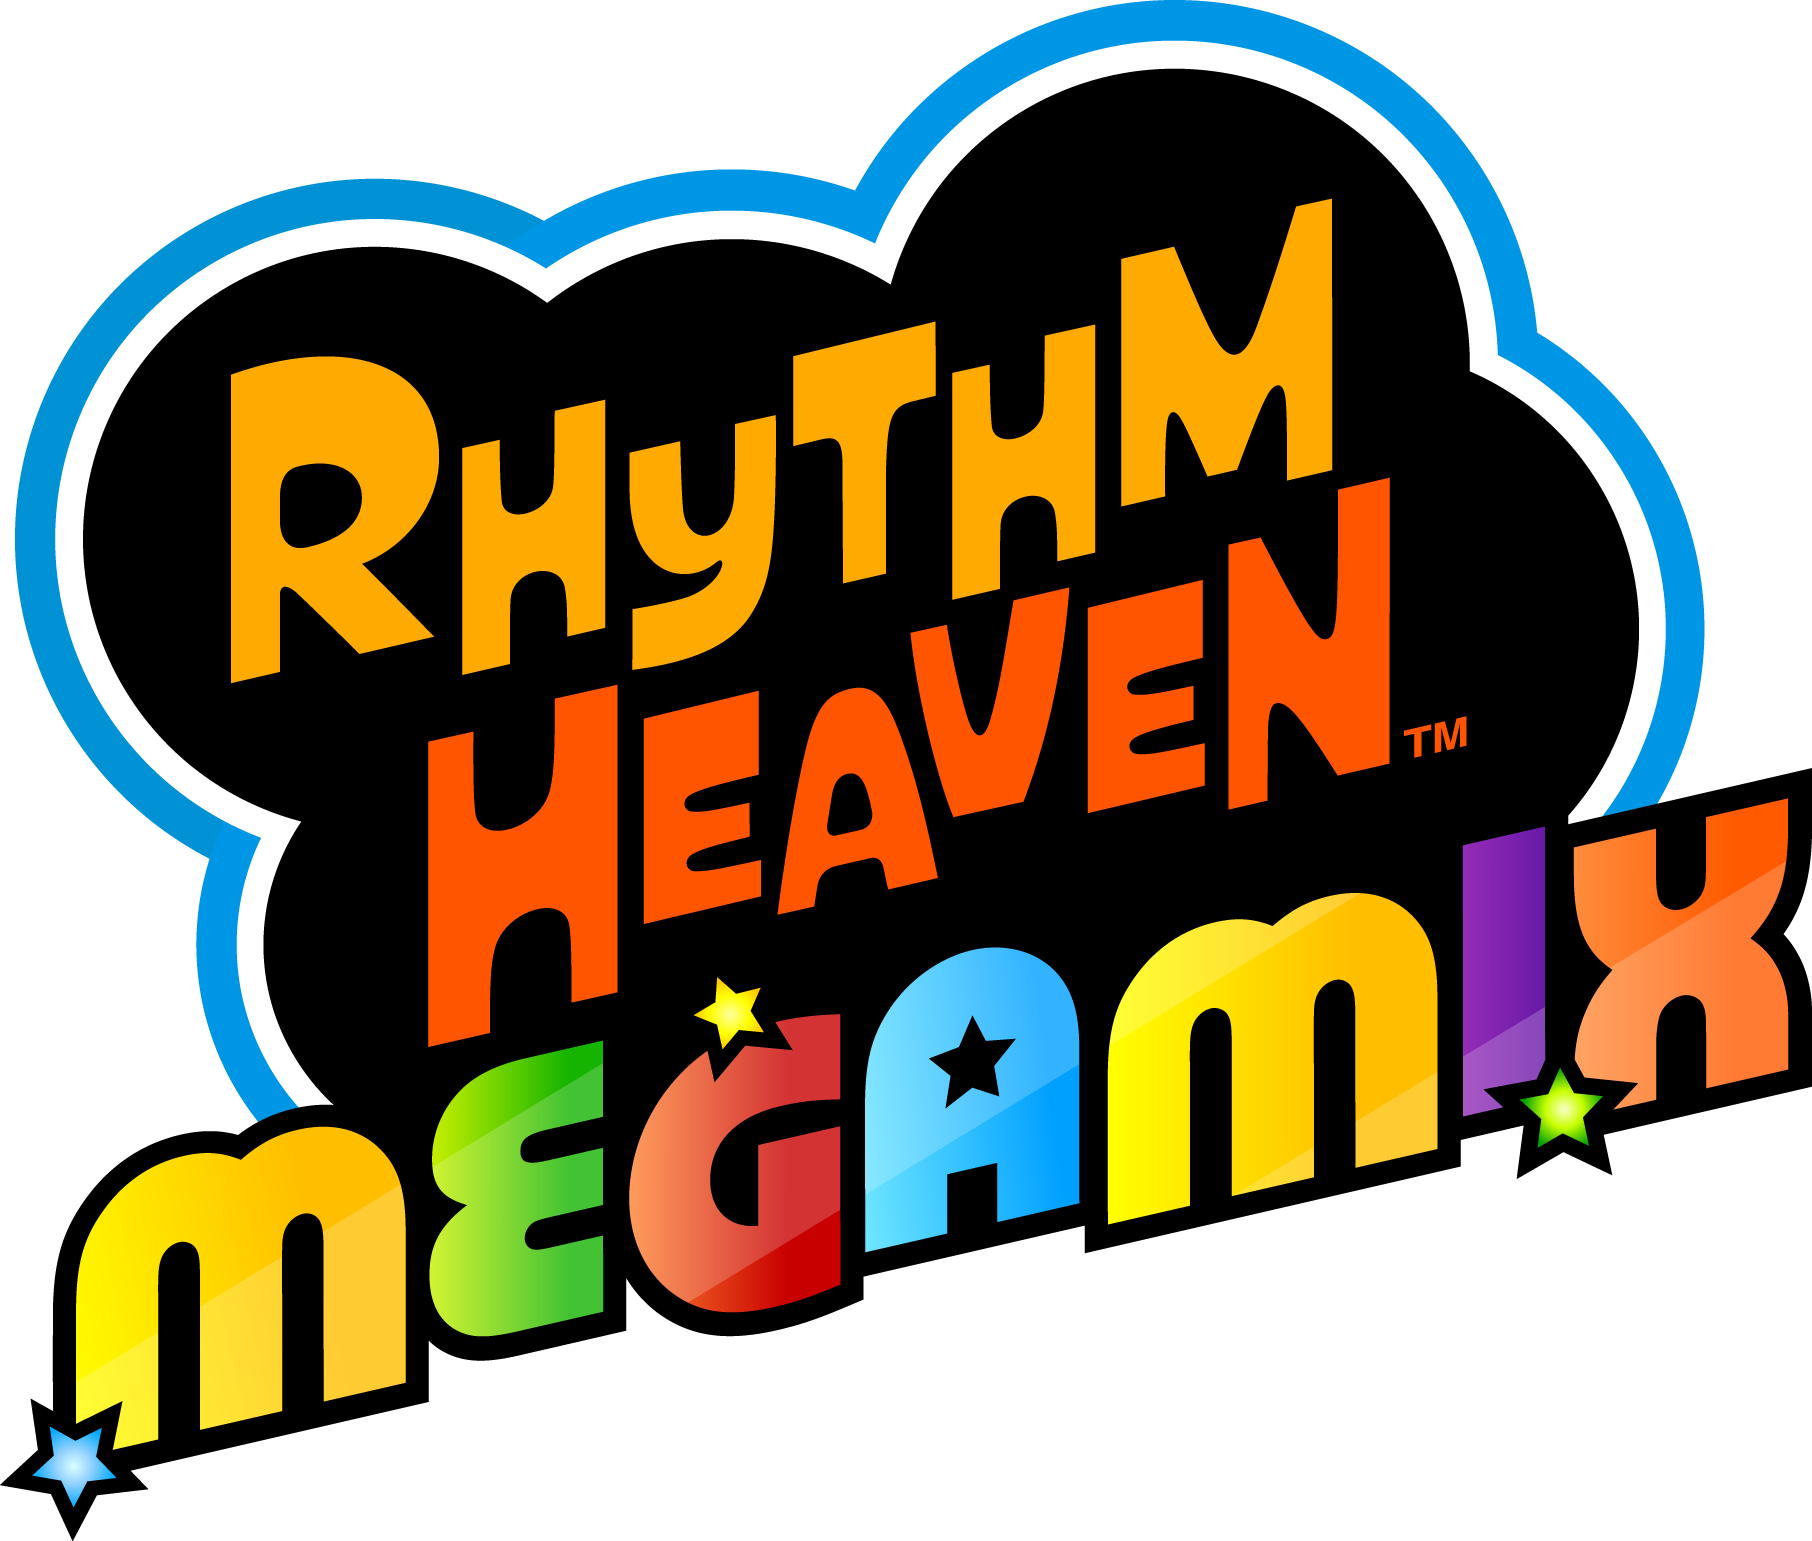 3ds rhythm heaven